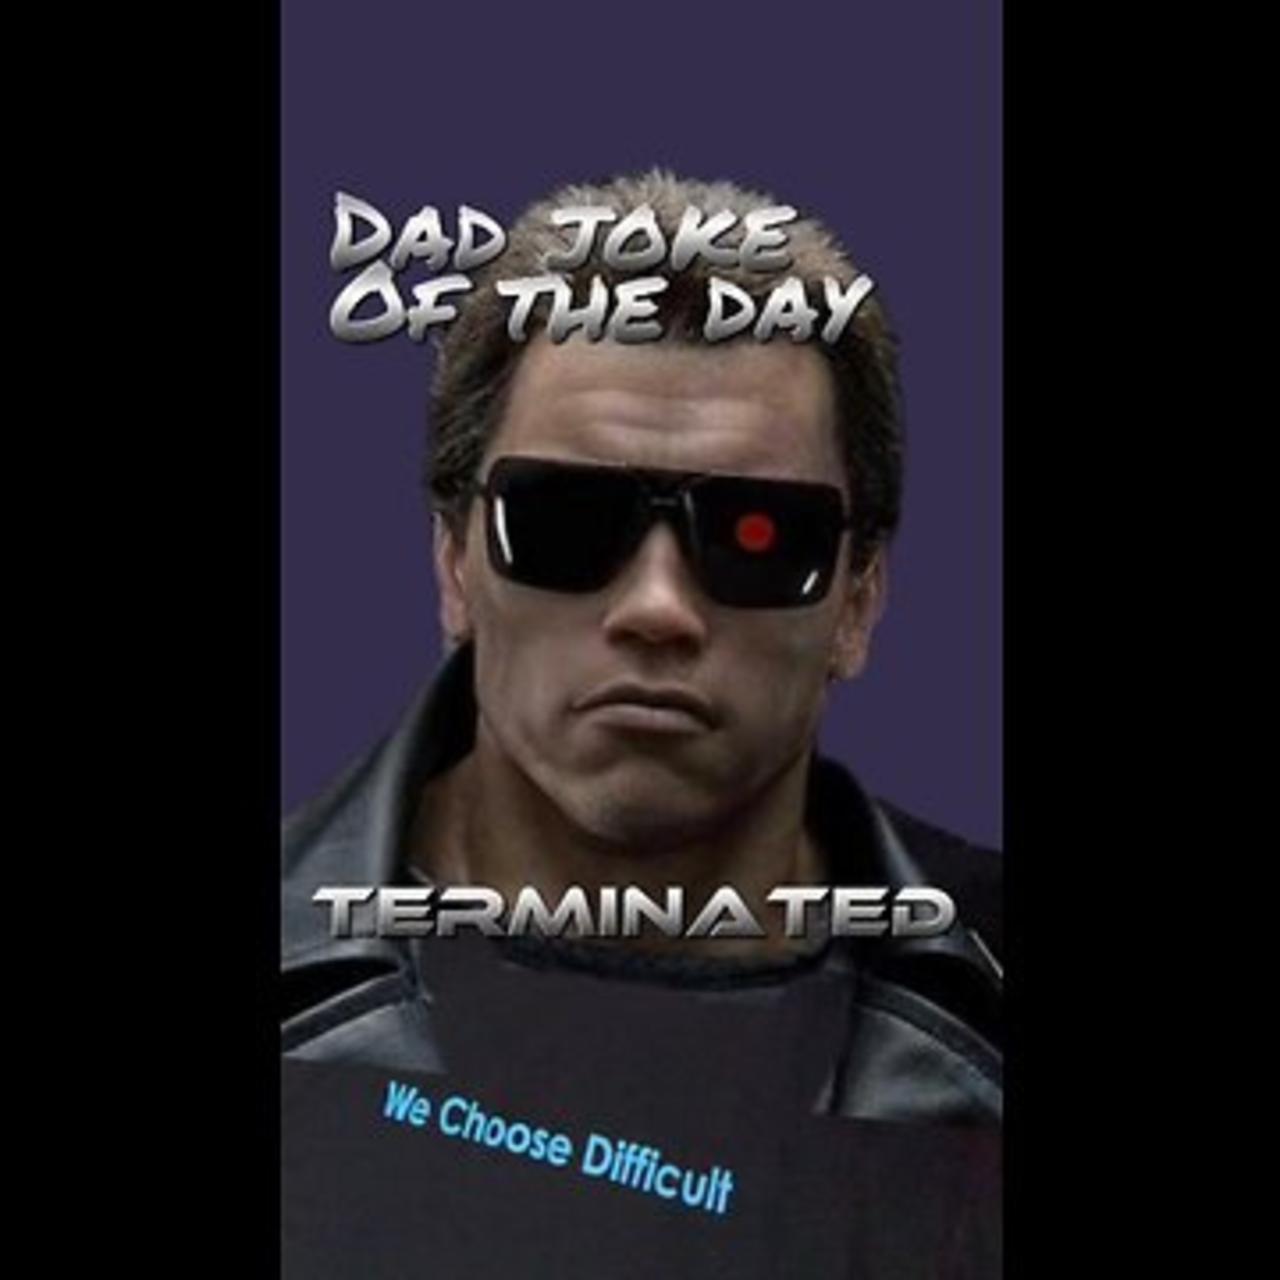 Terminated! Hasta la vista, Baby! - Dad Joke Dilemma of the Day